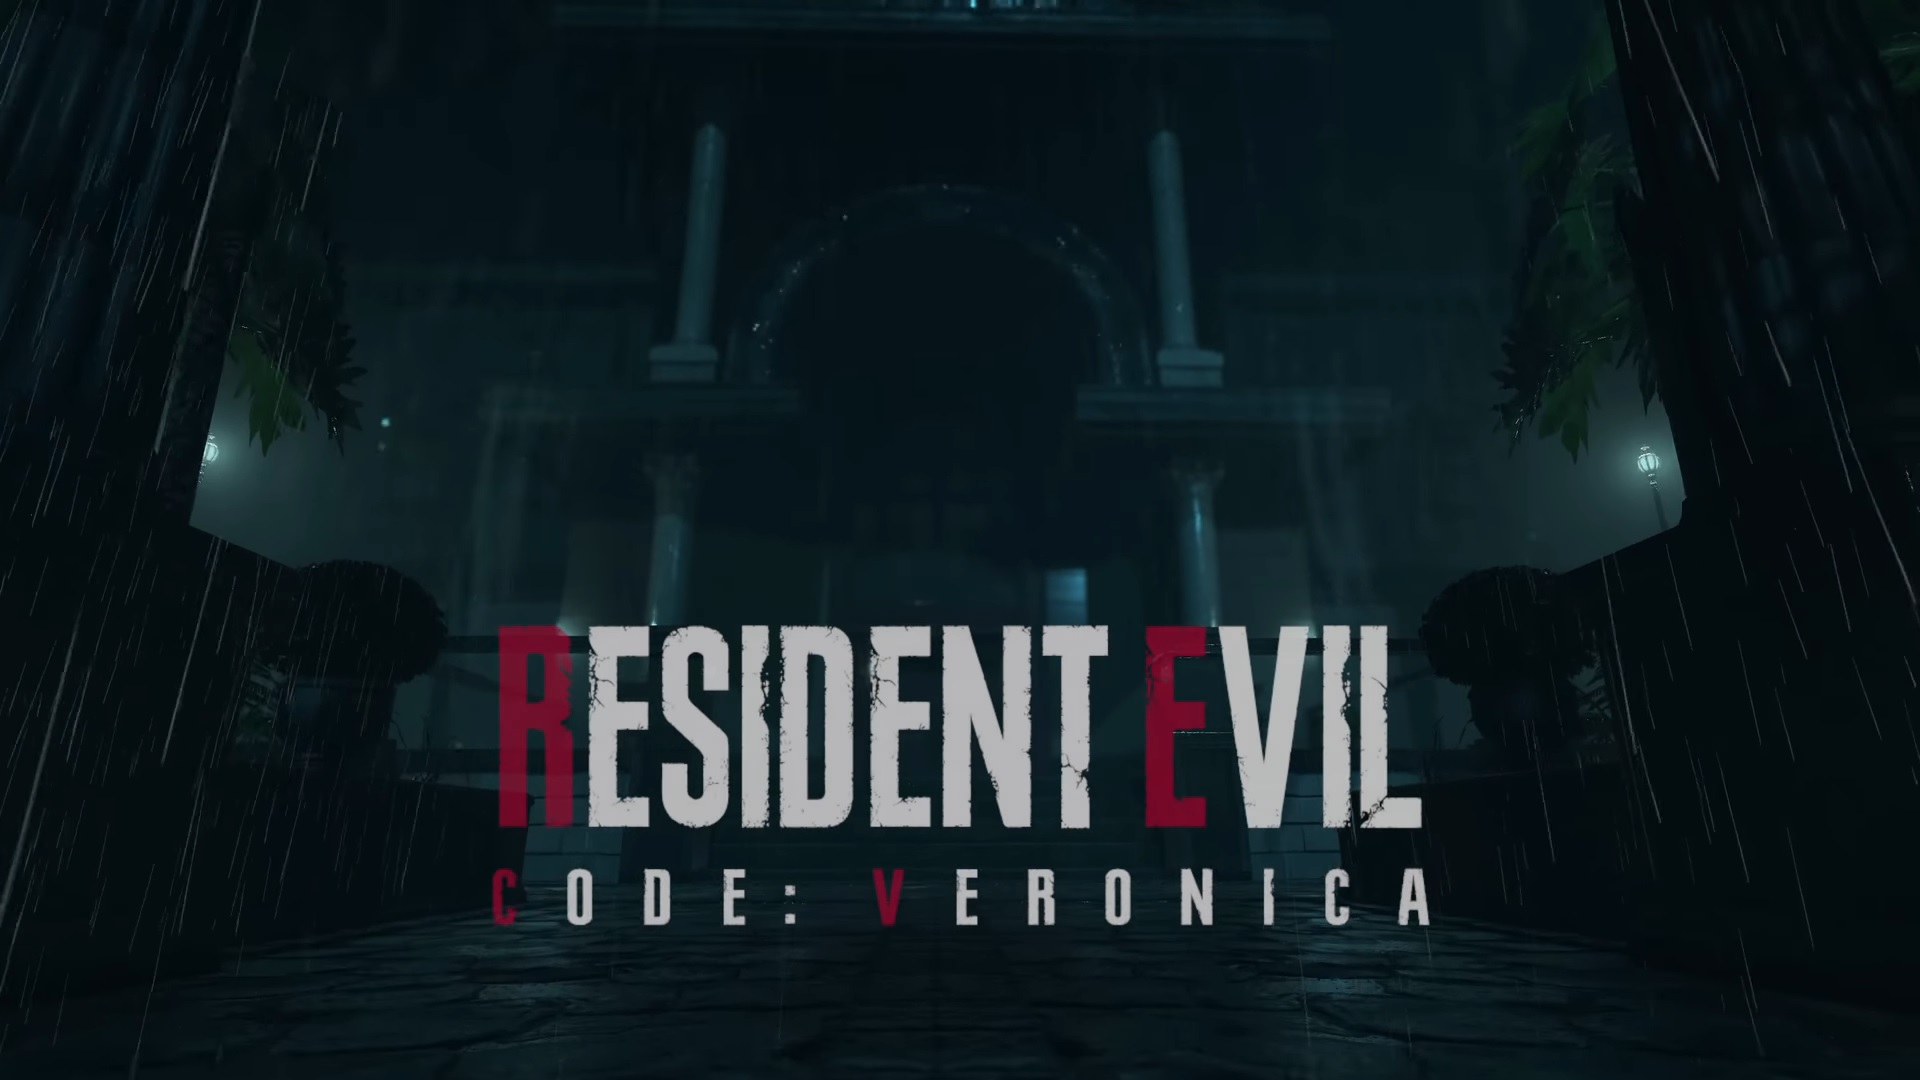 Resident Evil: Code Veronica ได้รับการรีเมกใหม่แล้ว จากแฟนเกม